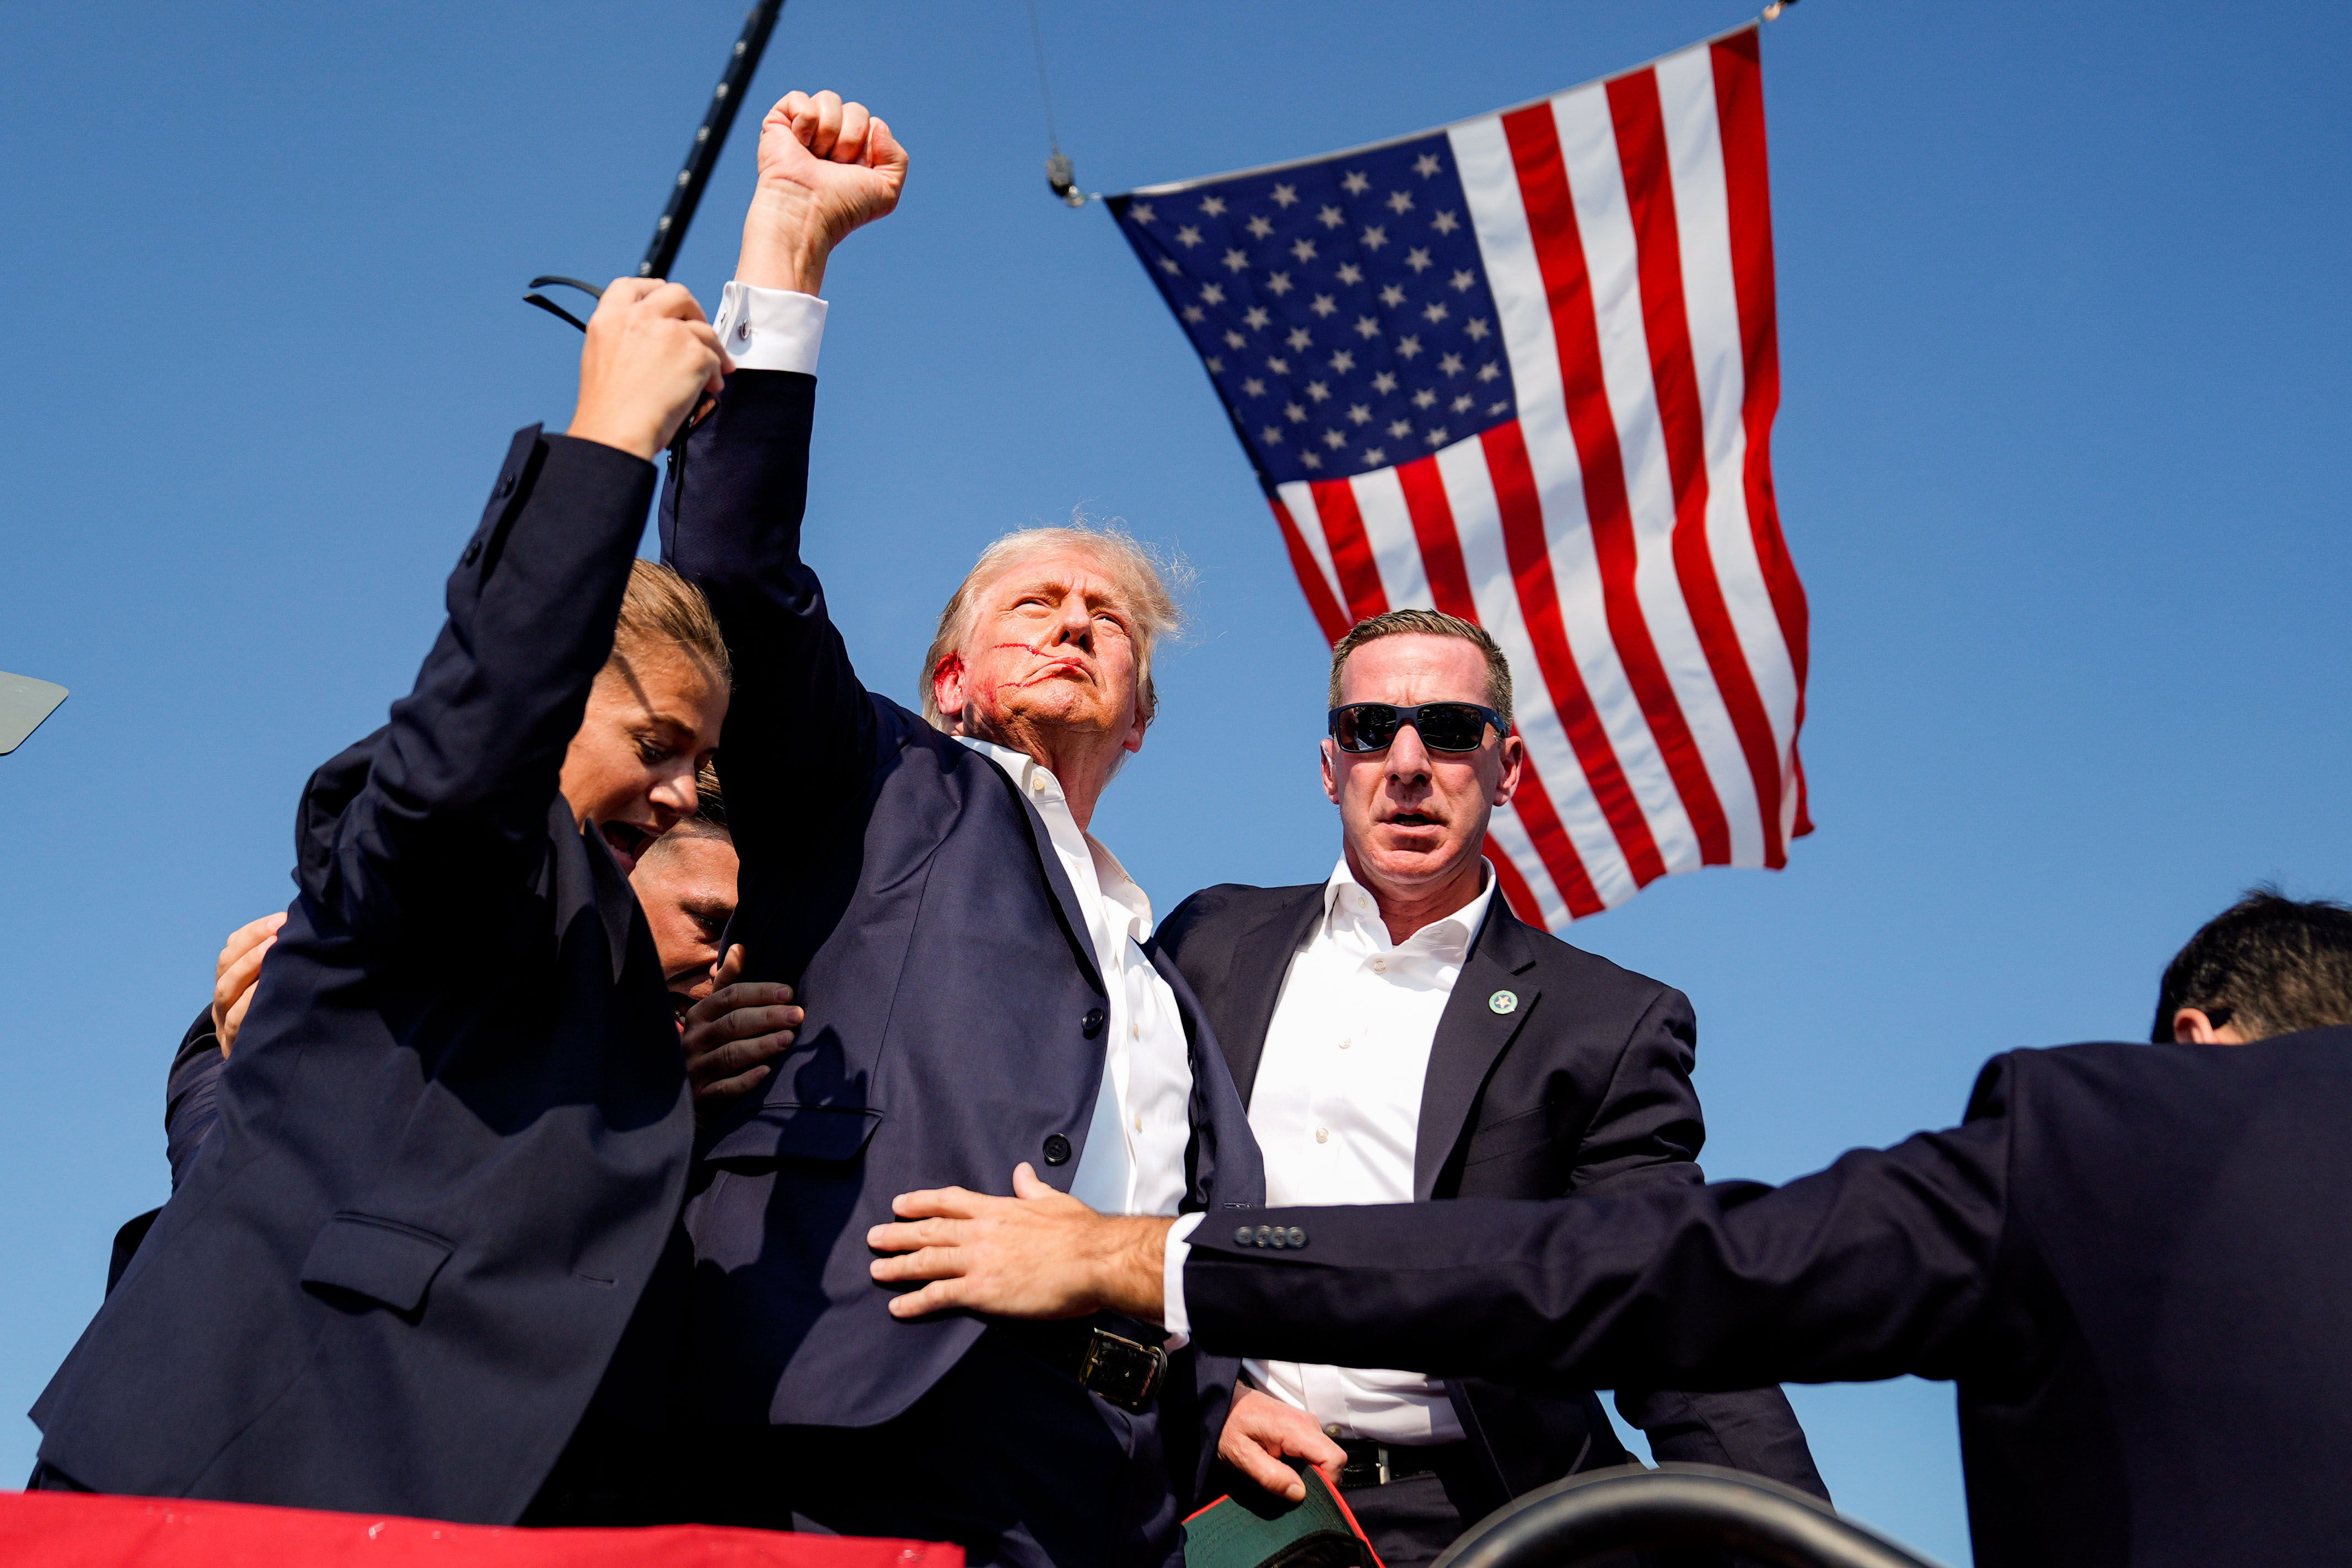 In Photos: Shooting at Trump Rally